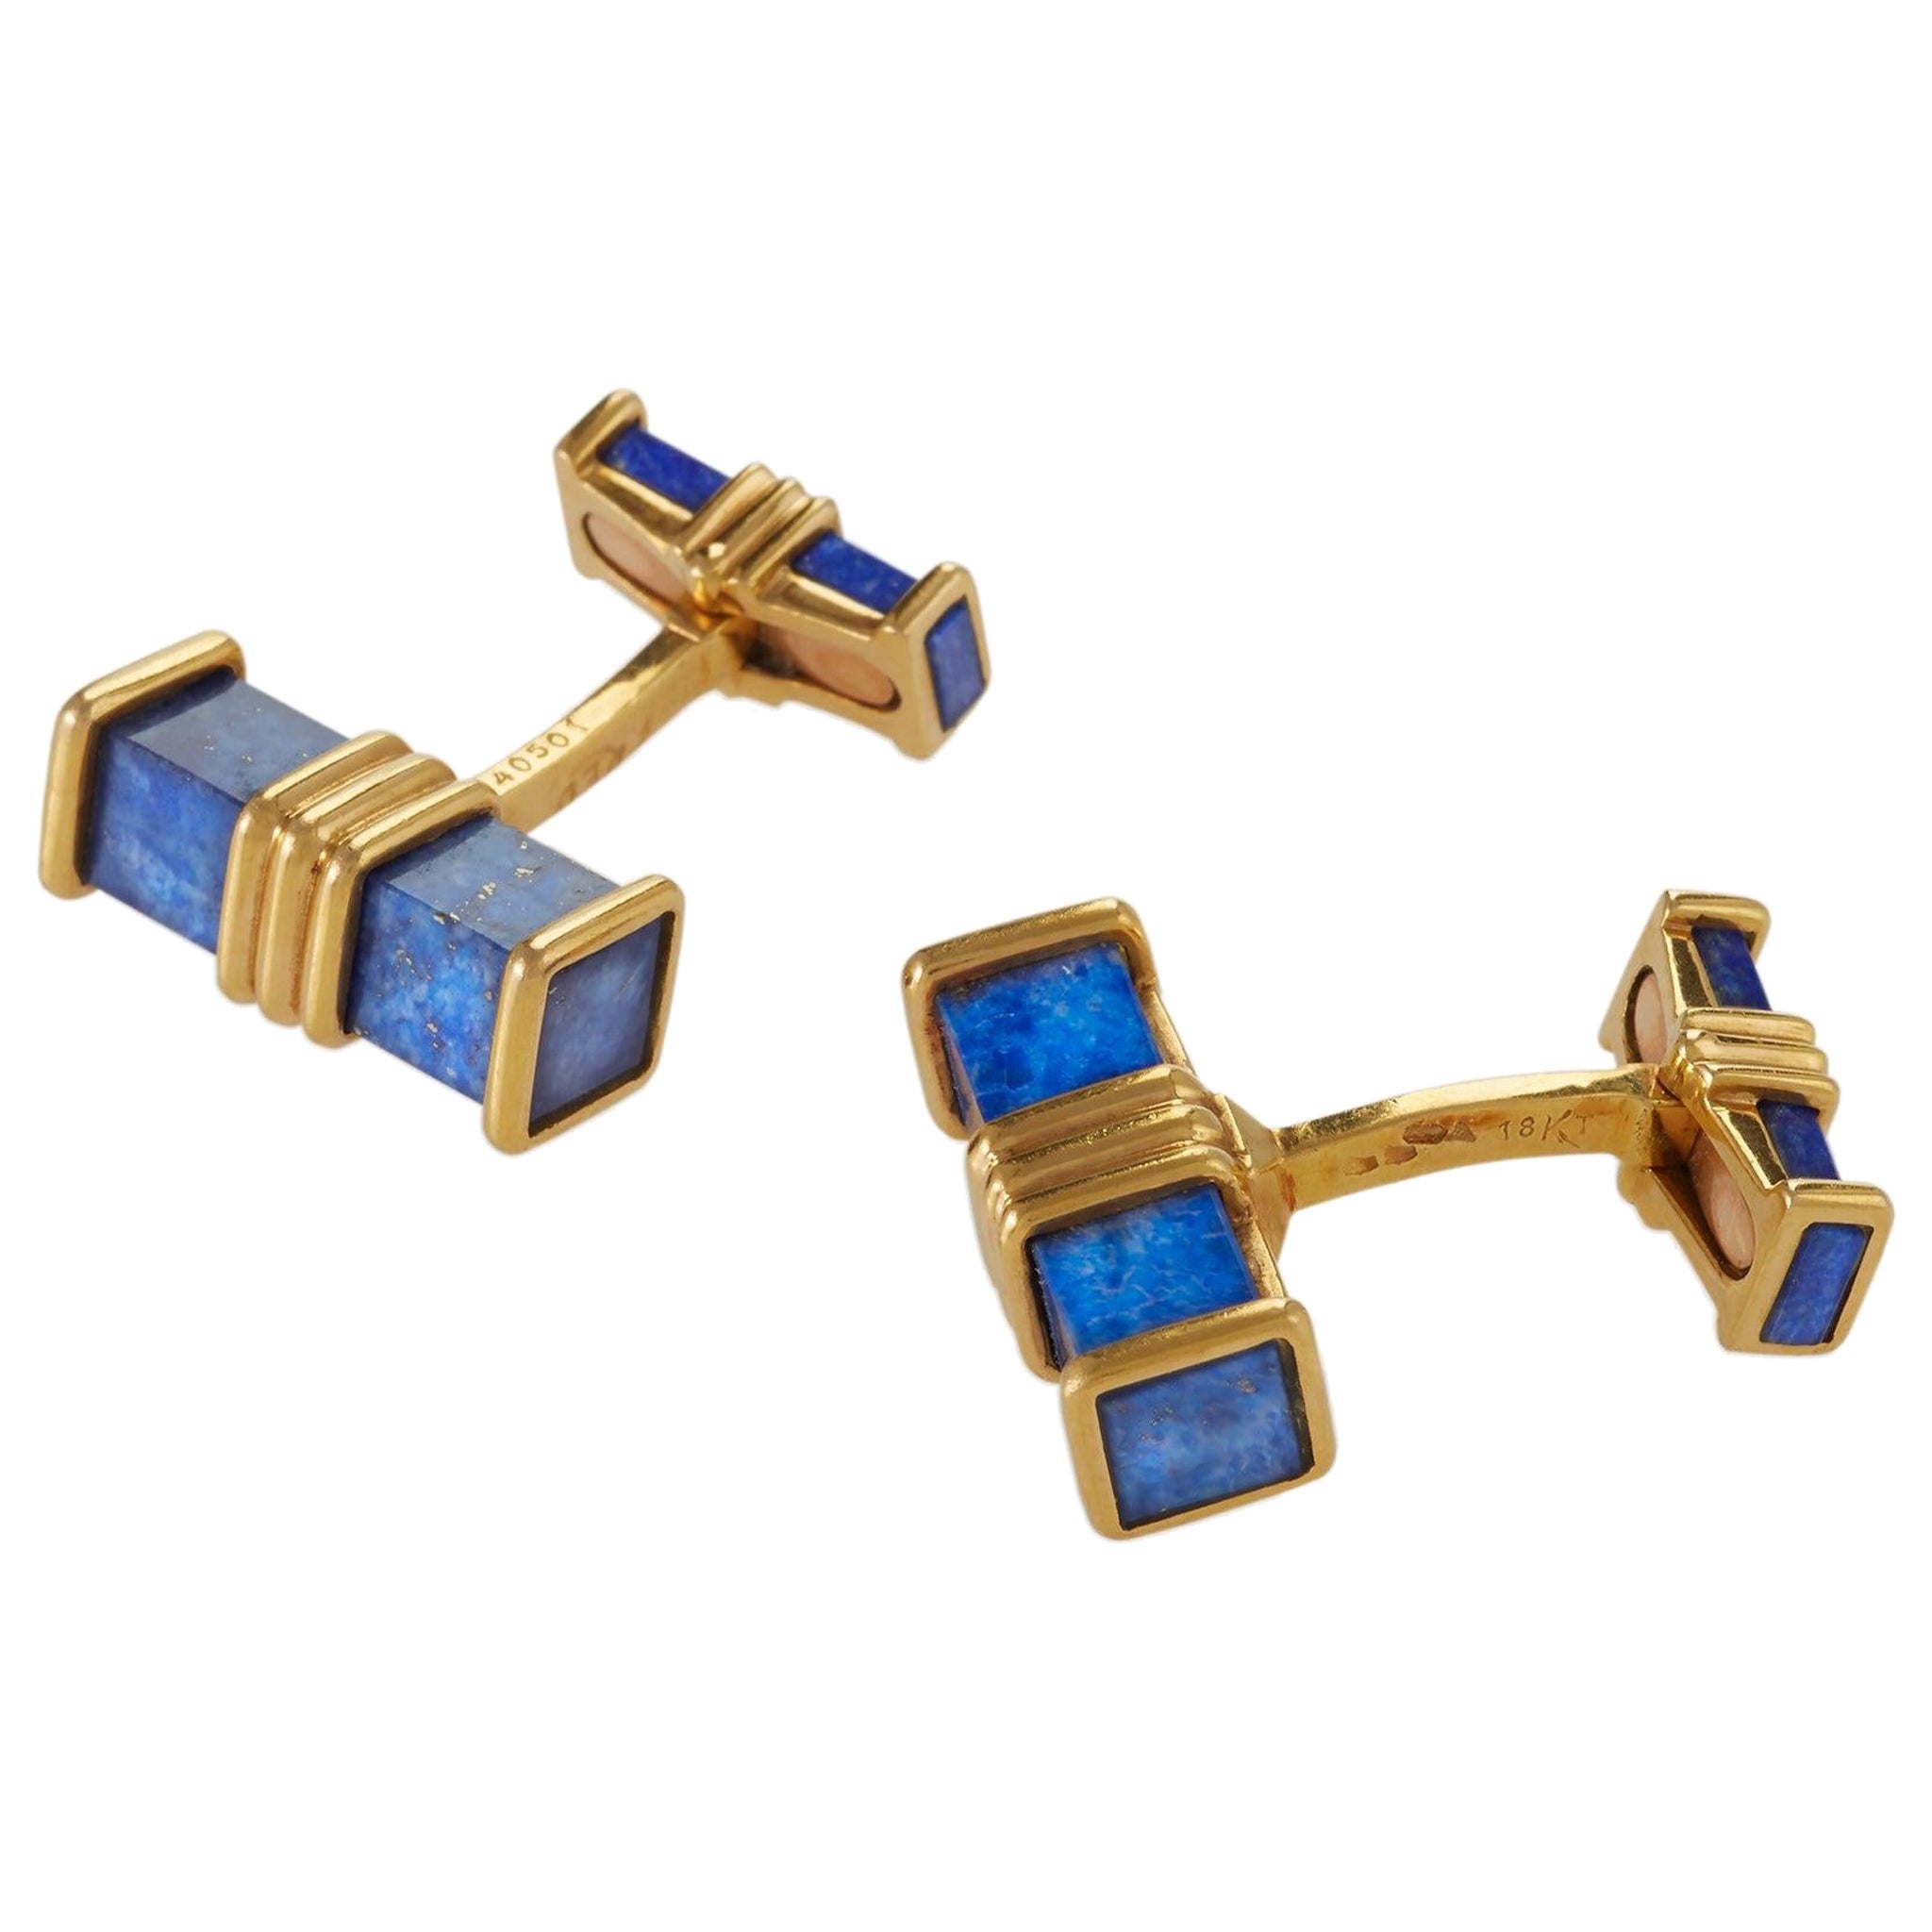 Fred Paris Lapis Lazuli Baton Cuff Links 